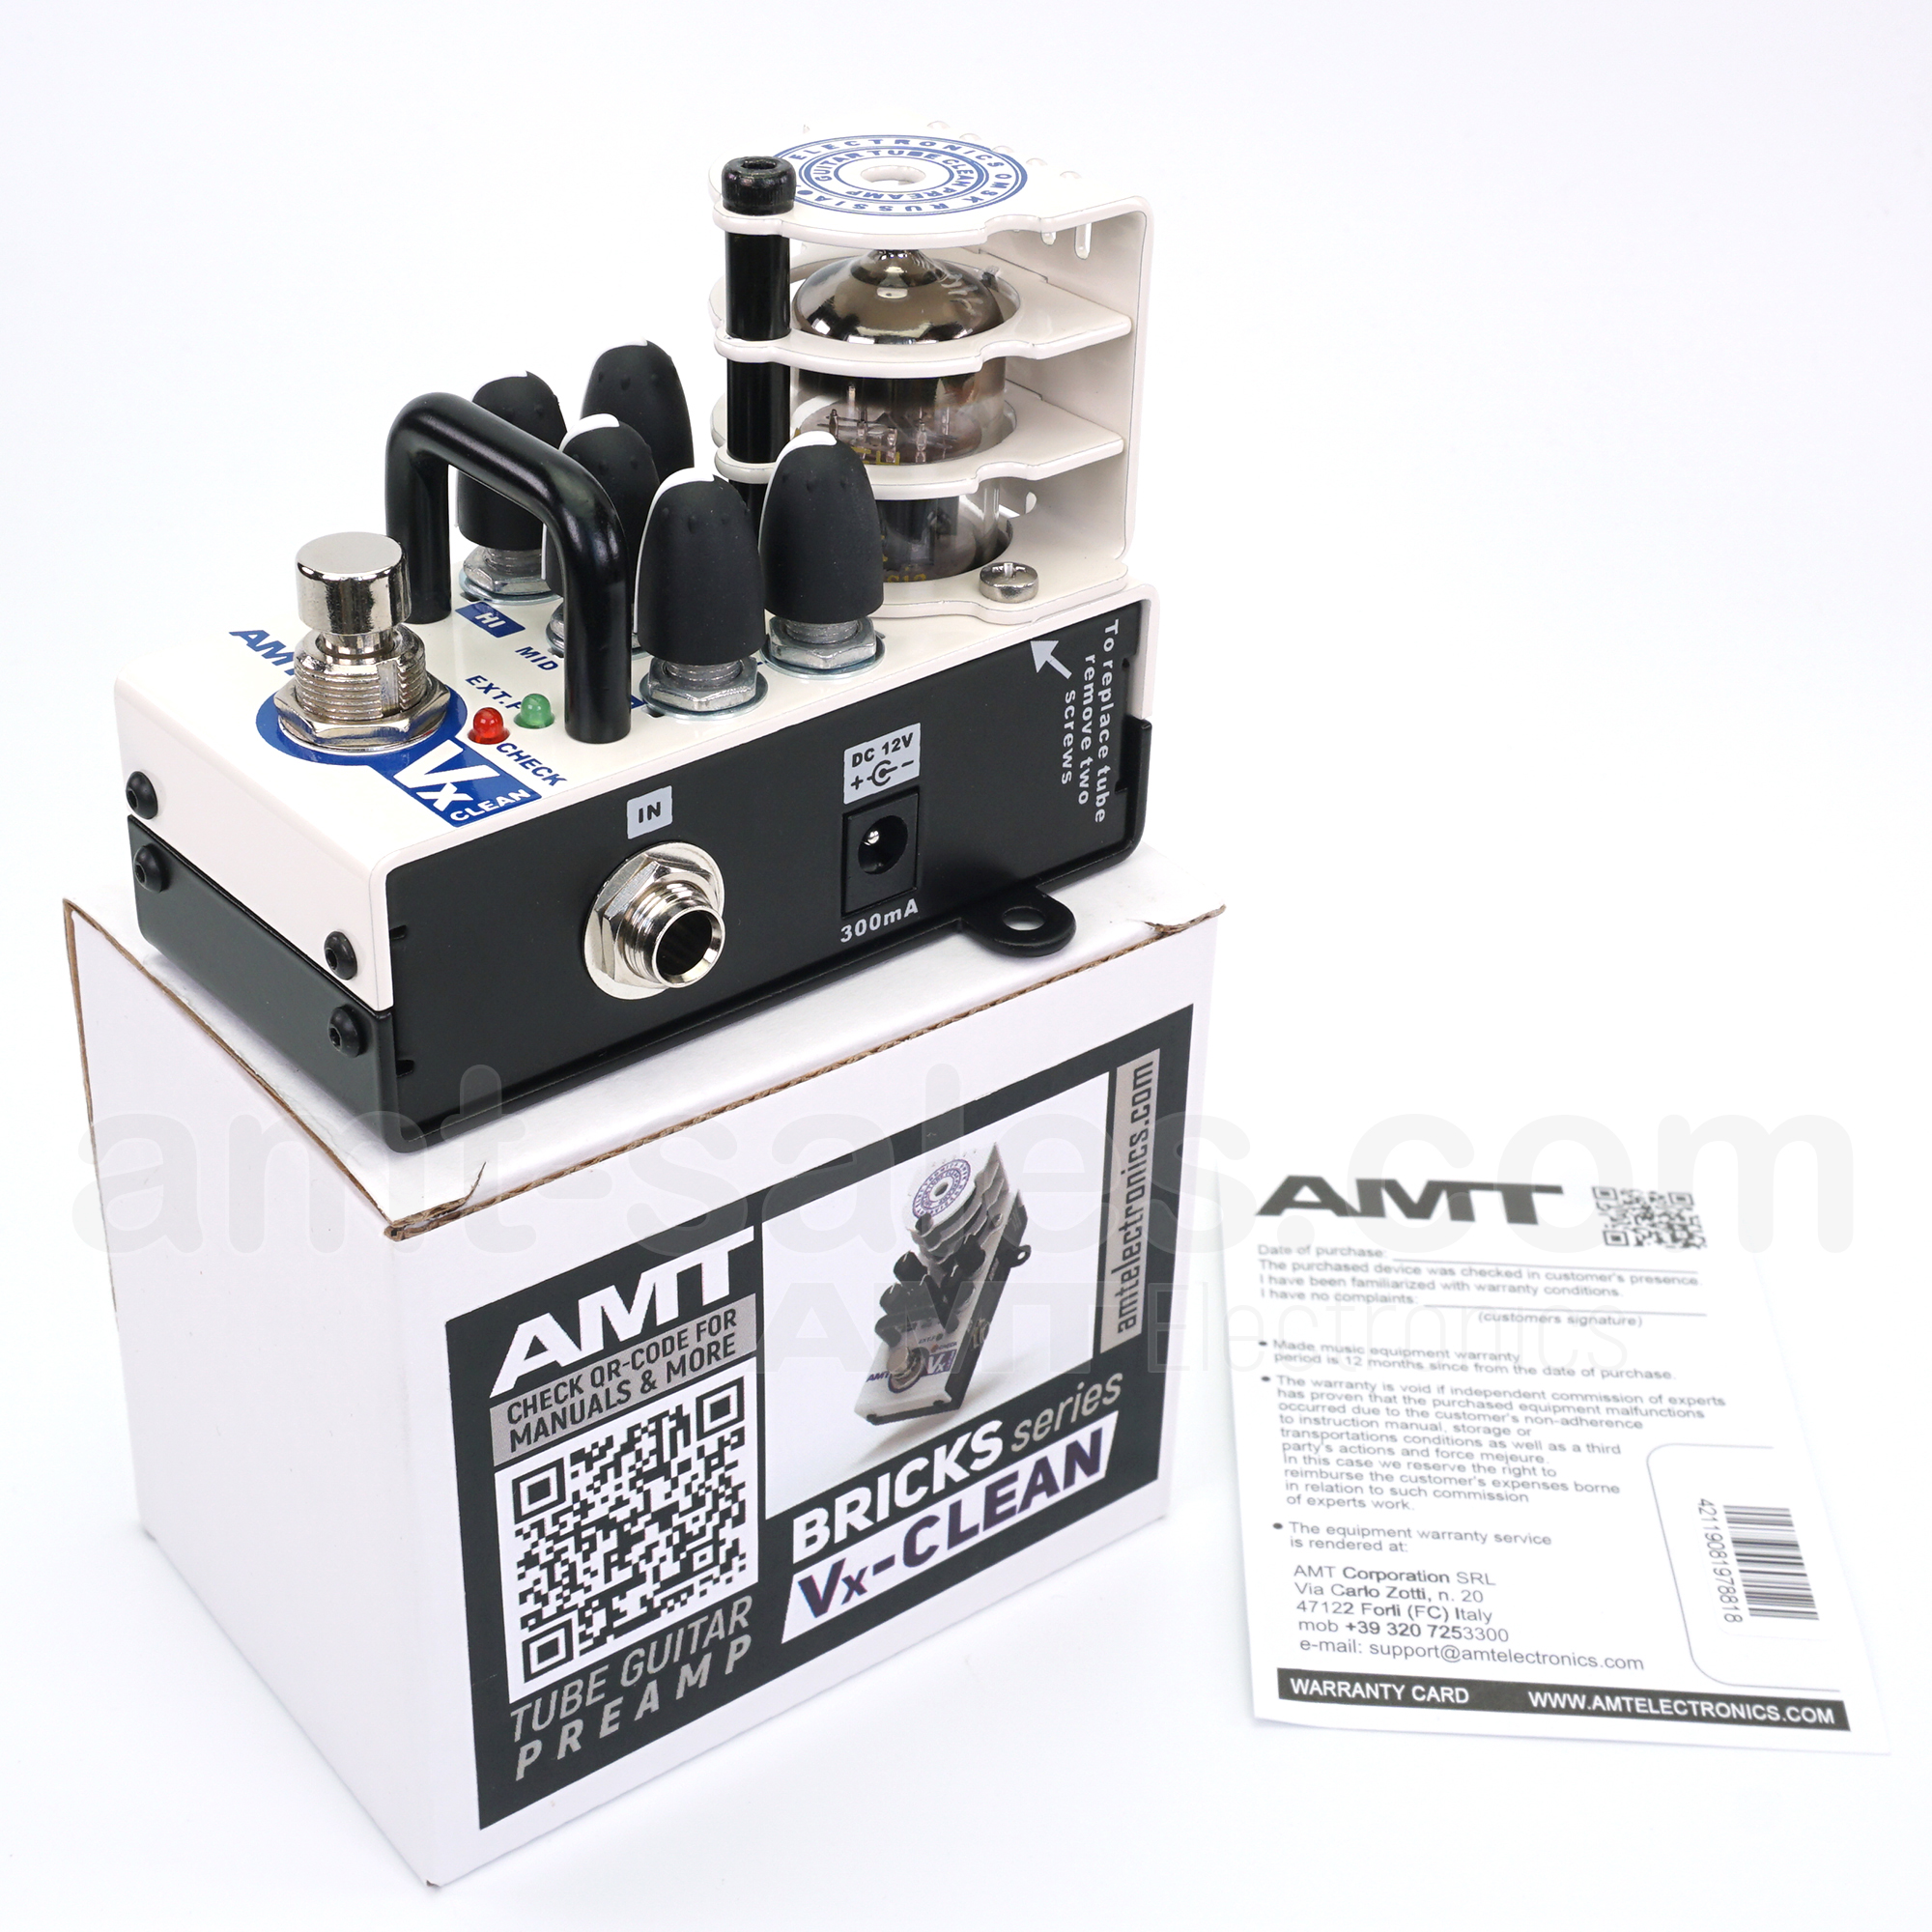 AMT Bricks Vx-CLEAN - 1 channel tube guitar preamp (VOX AC30)